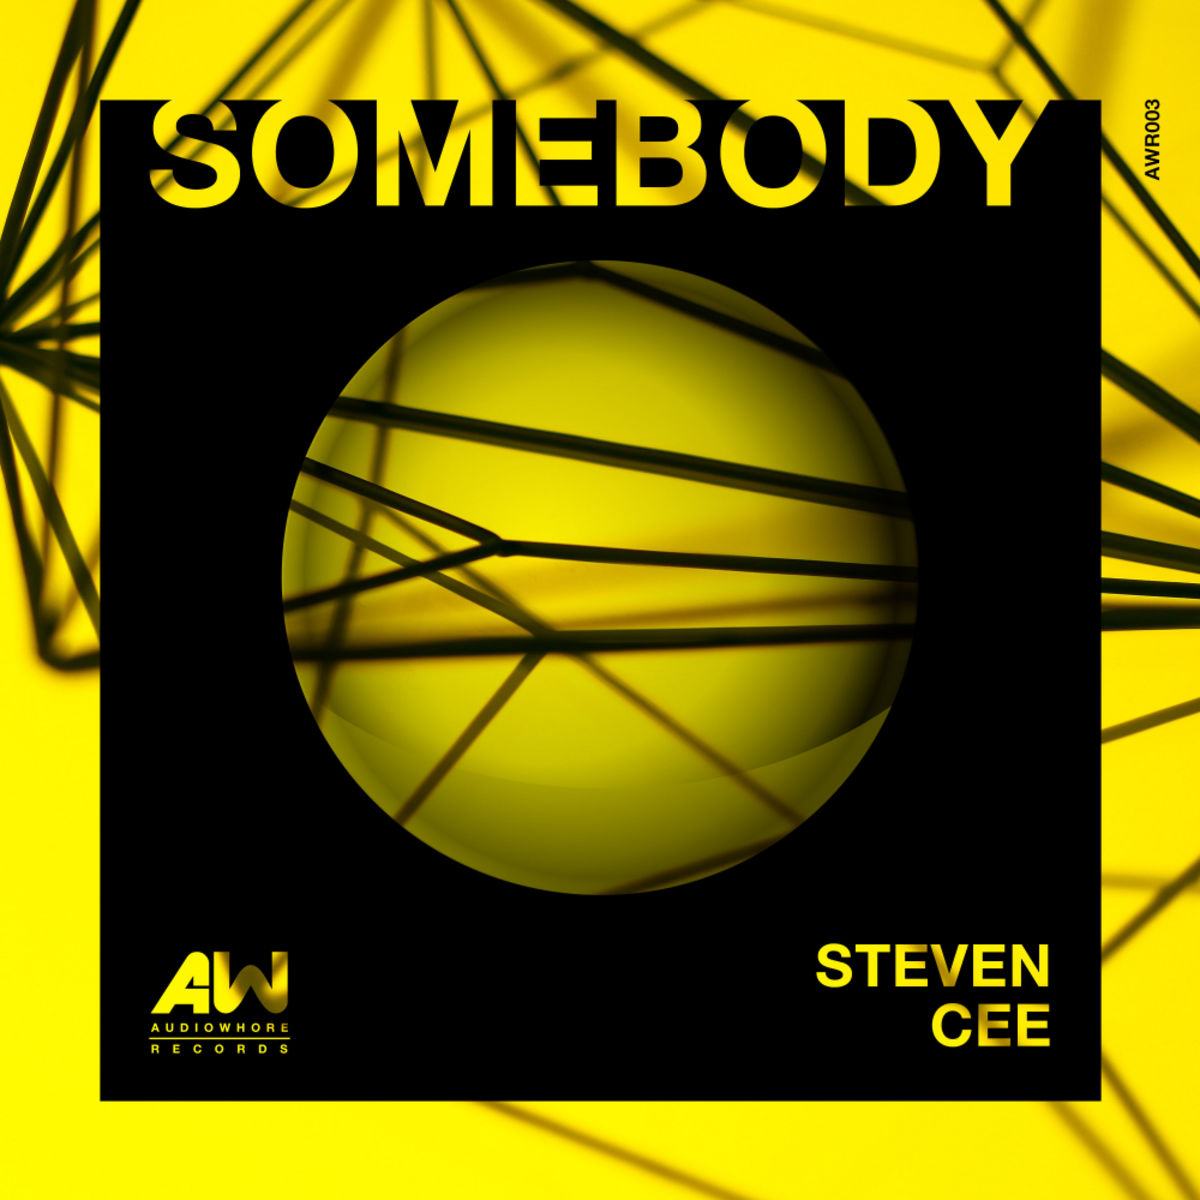 Steven Cee - Somebody / Audiowhore Records